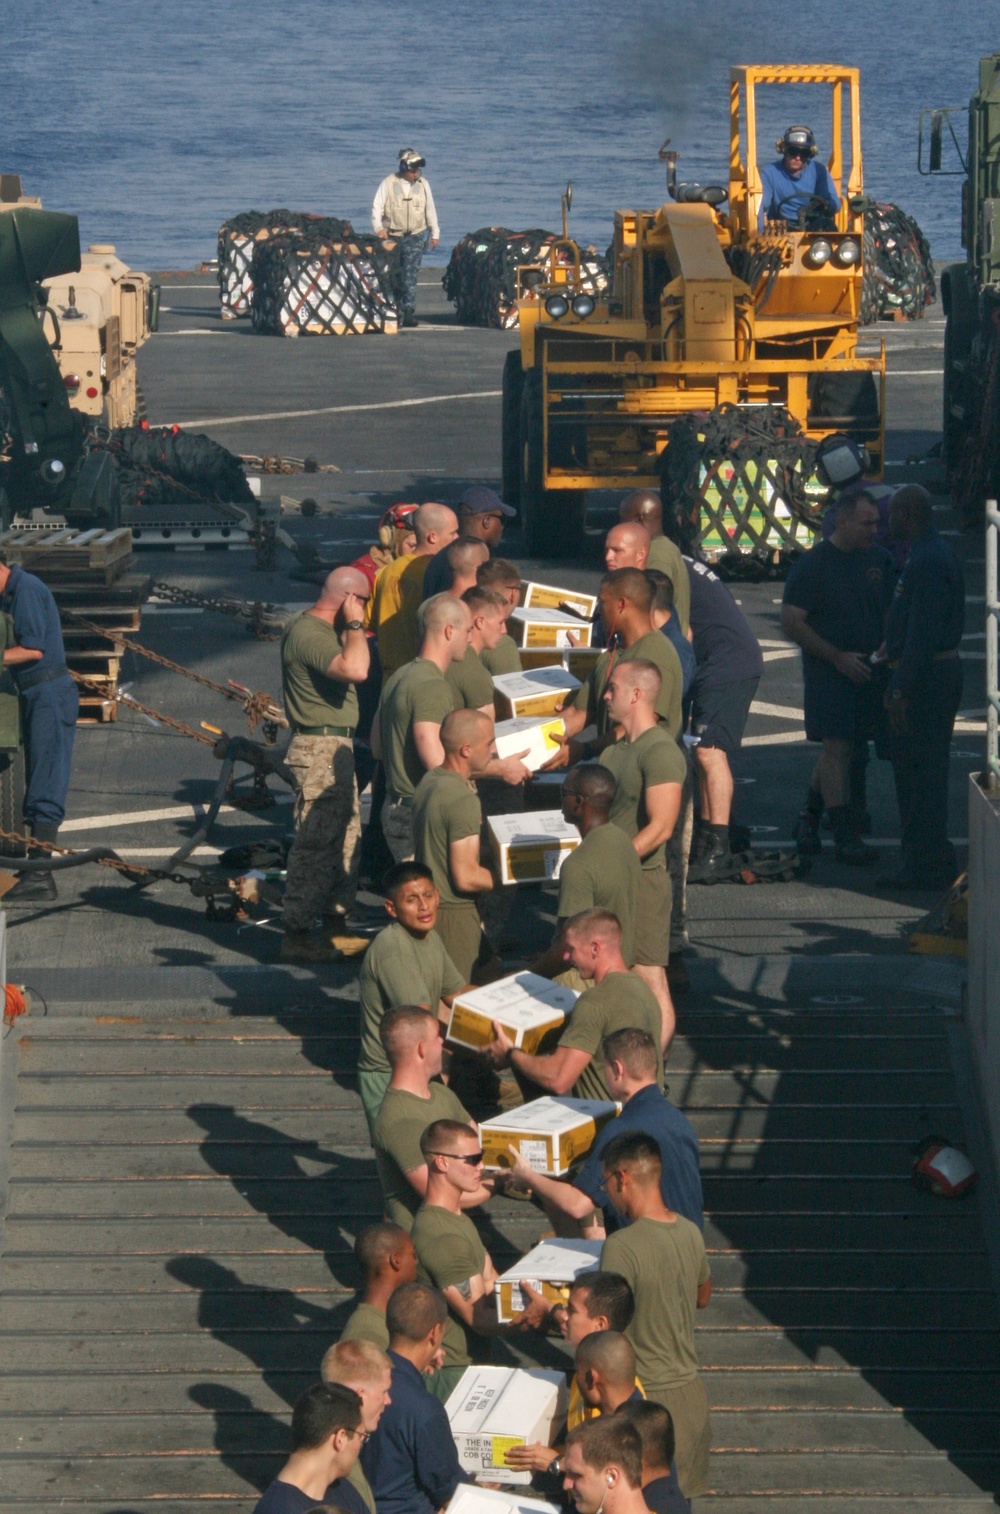 22nd MEU Marines, Fort McHenry sailors conduct underway replenishment